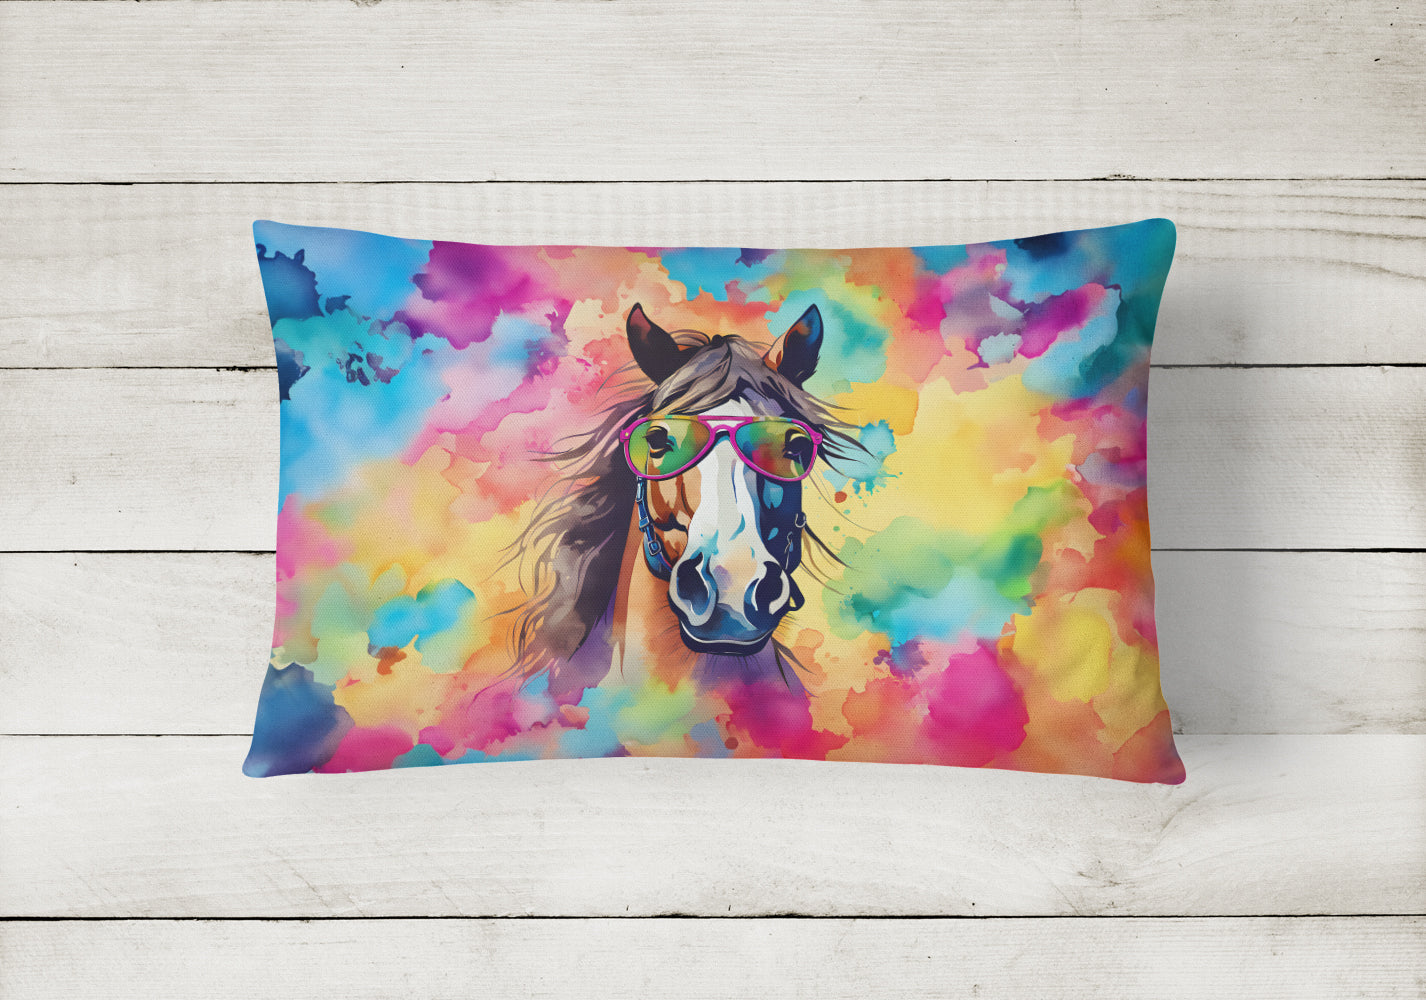 Buy this Hippie Animal Horse Throw Pillow